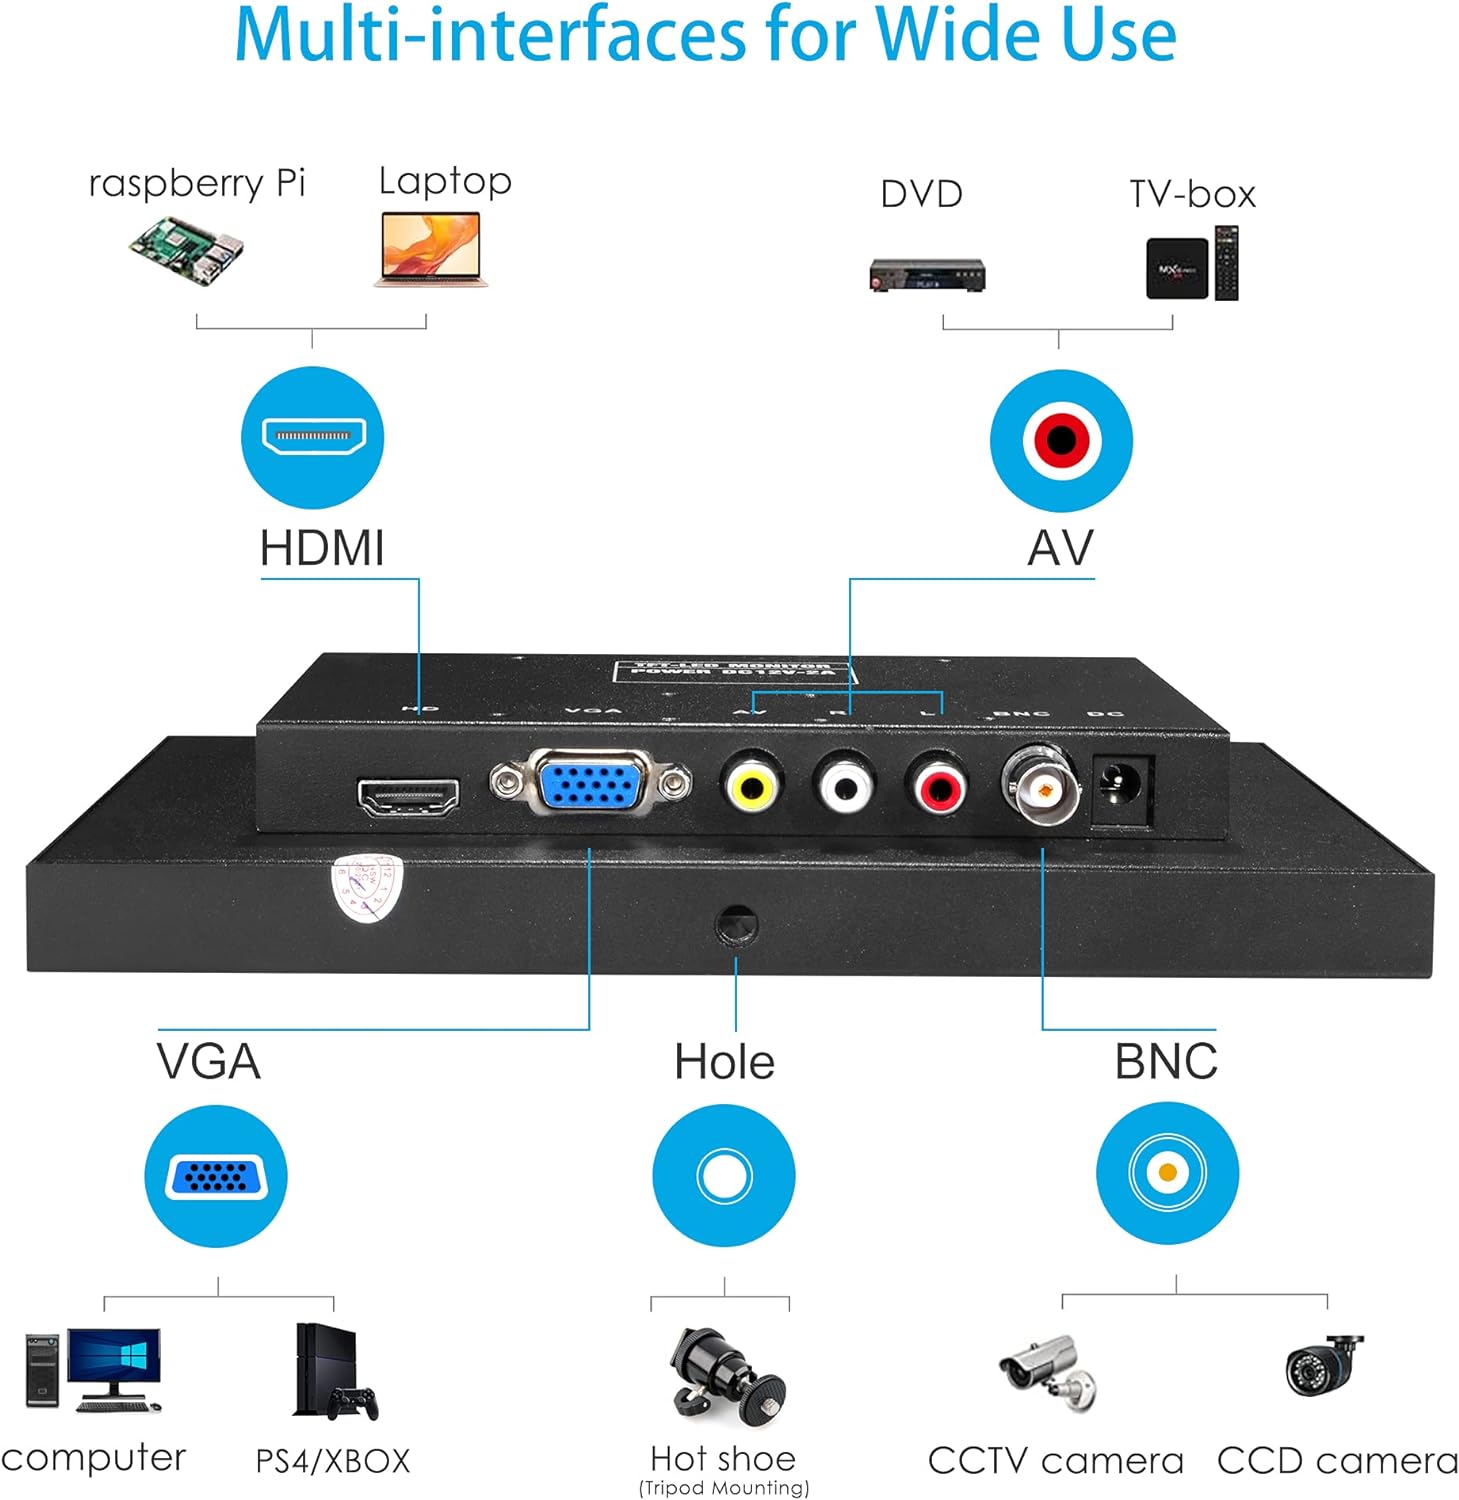 Dcorn 8 inch Mini Monitor, Small HDMI Monitor 1280x720 16:9 IPS Metal Housing Screen Support HDMI/VGA/AV/BNC Input with Wall Bracket